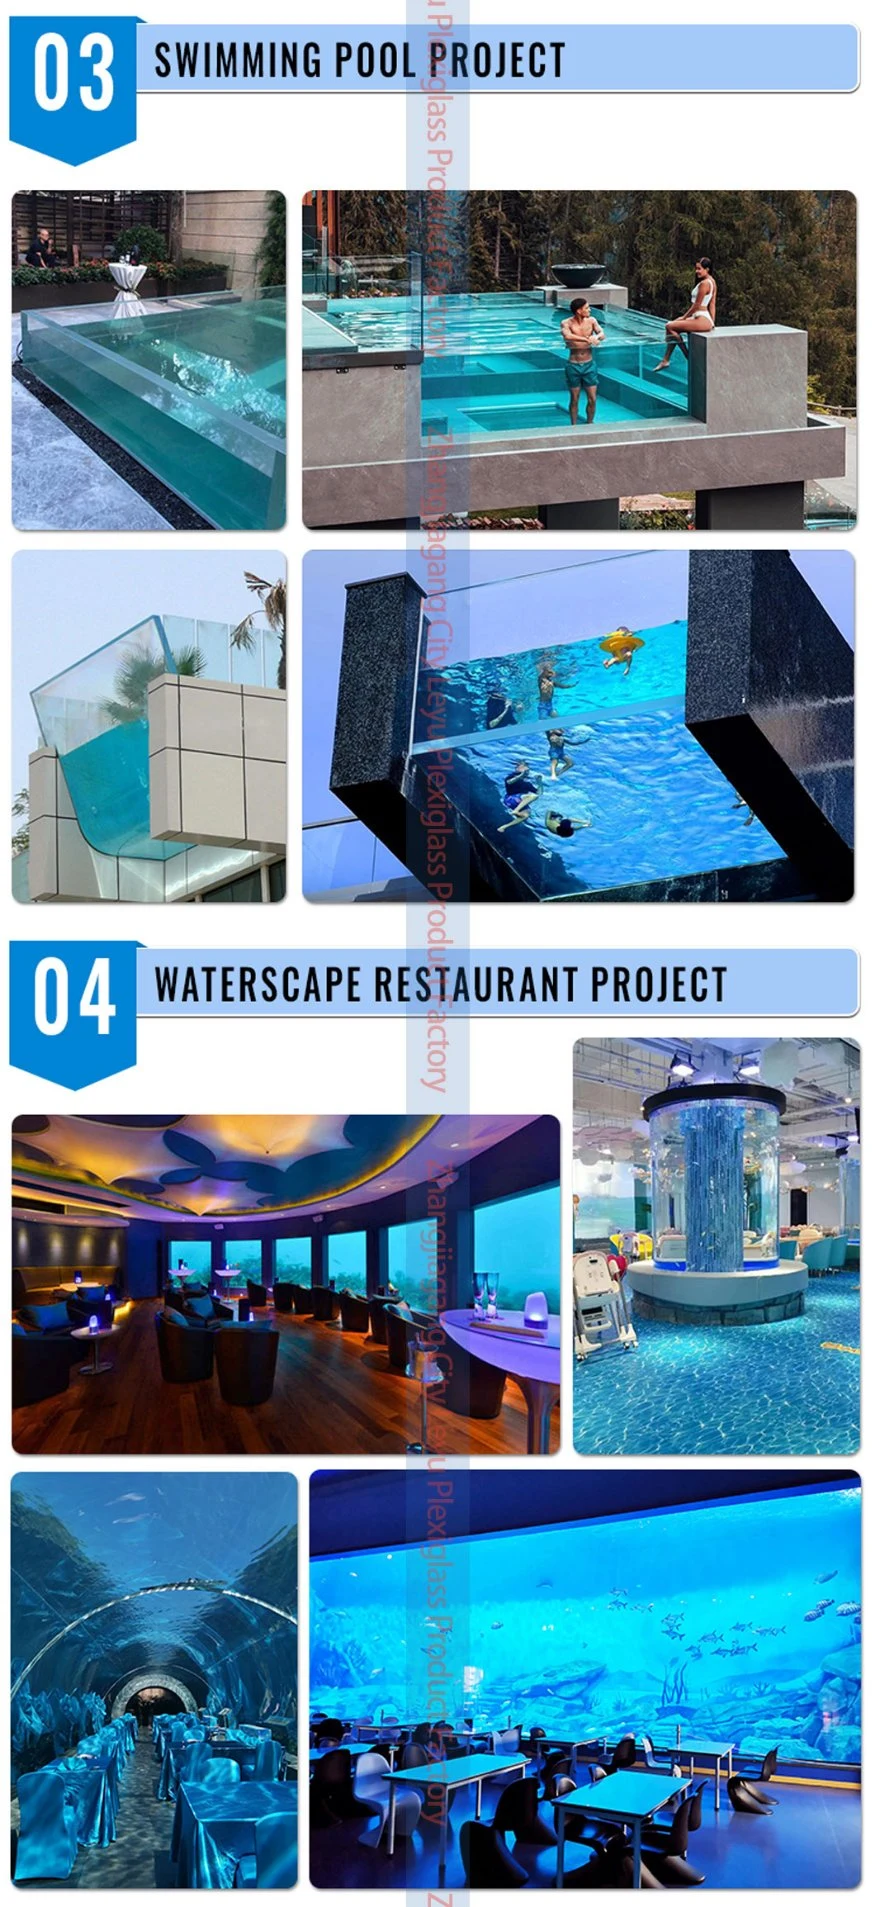 Acrylic Waterproof Panel for Ocean Aquarium Fish Tank